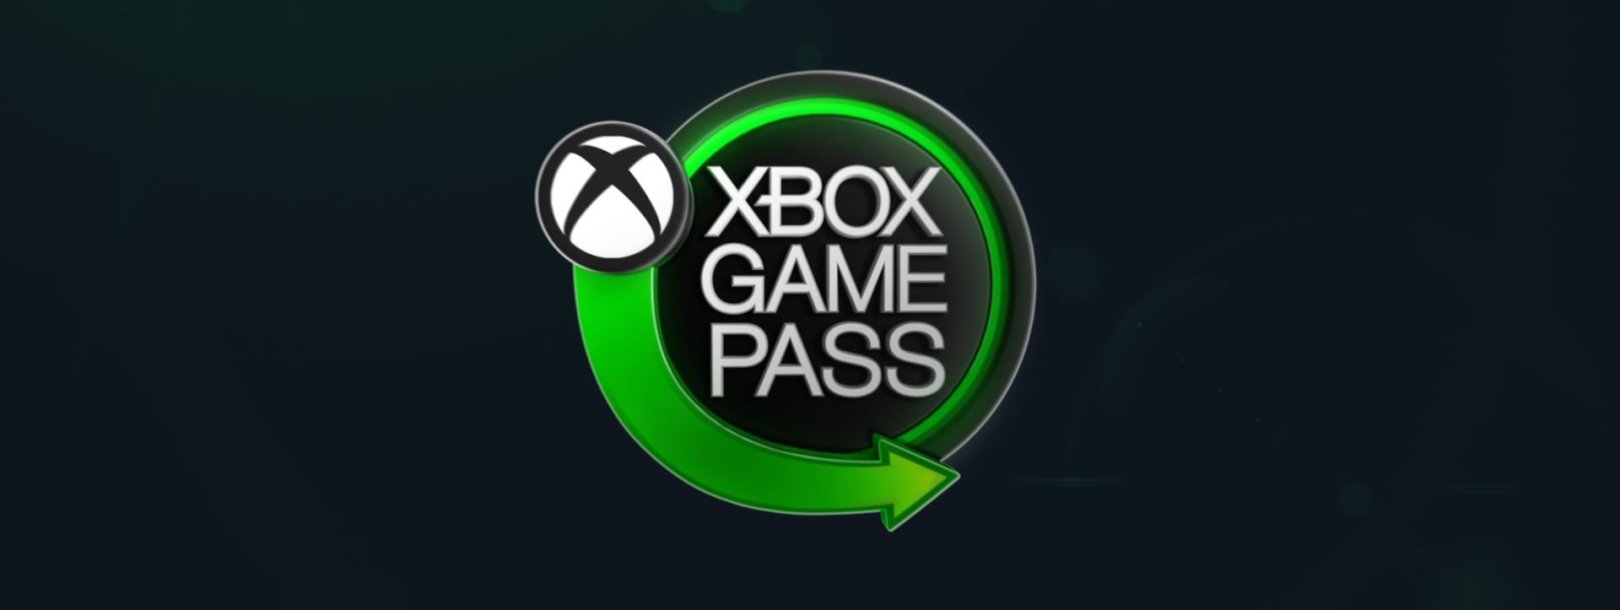 Xbox Game Pass Main Thread